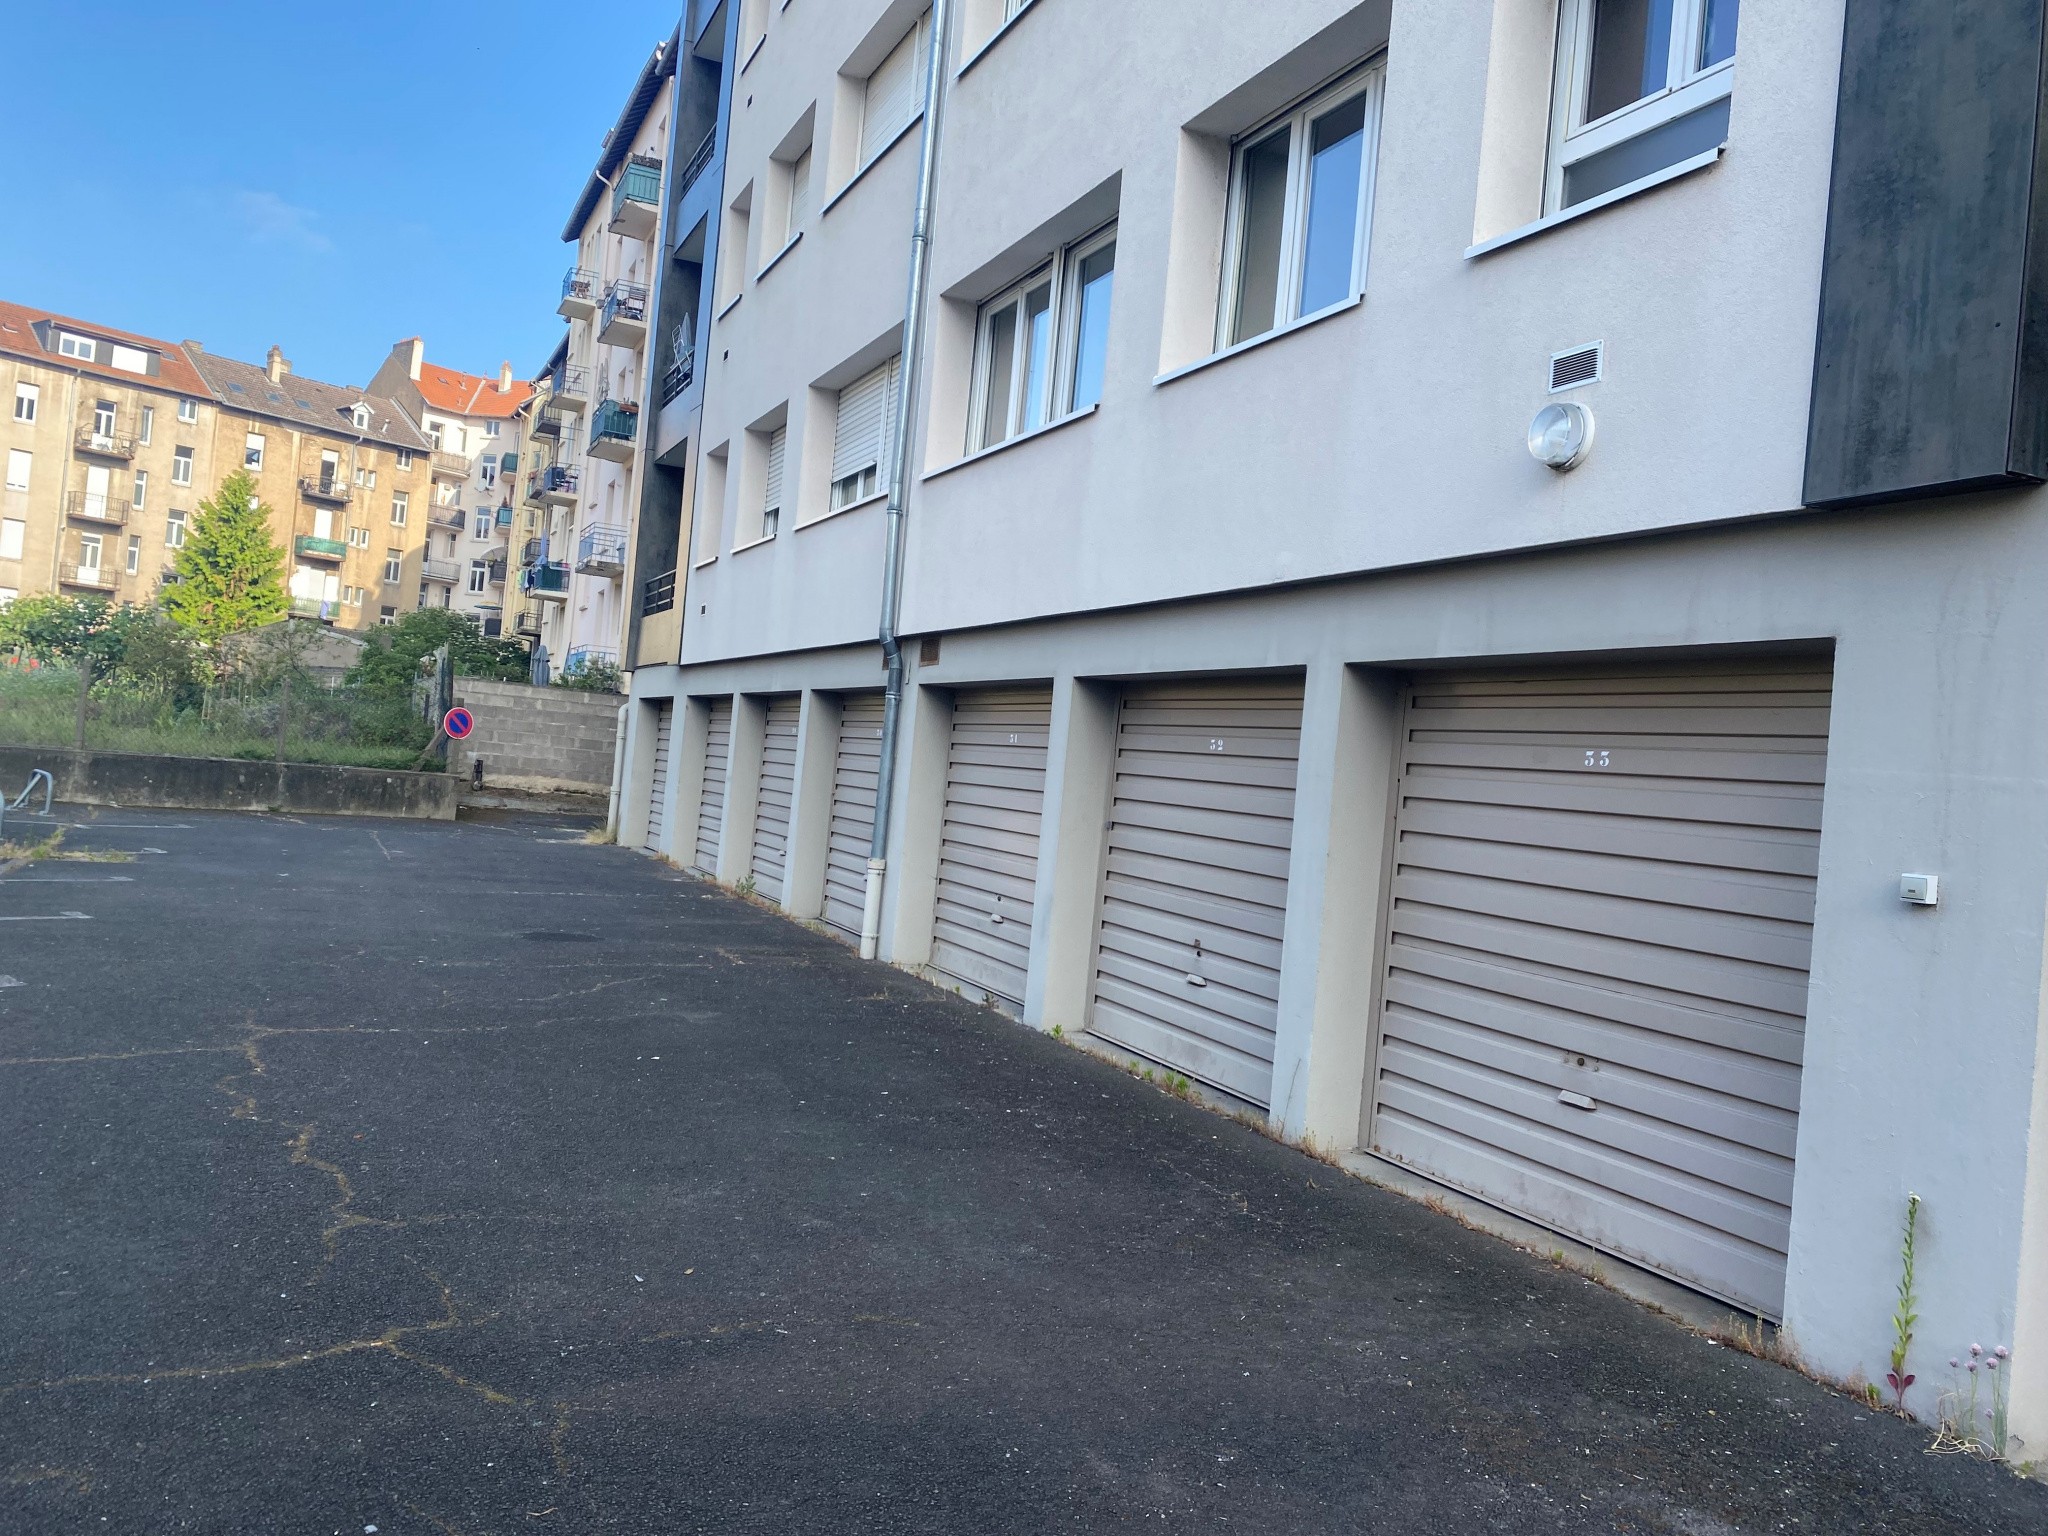 Location Garage / Parking à Metz 0 pièce